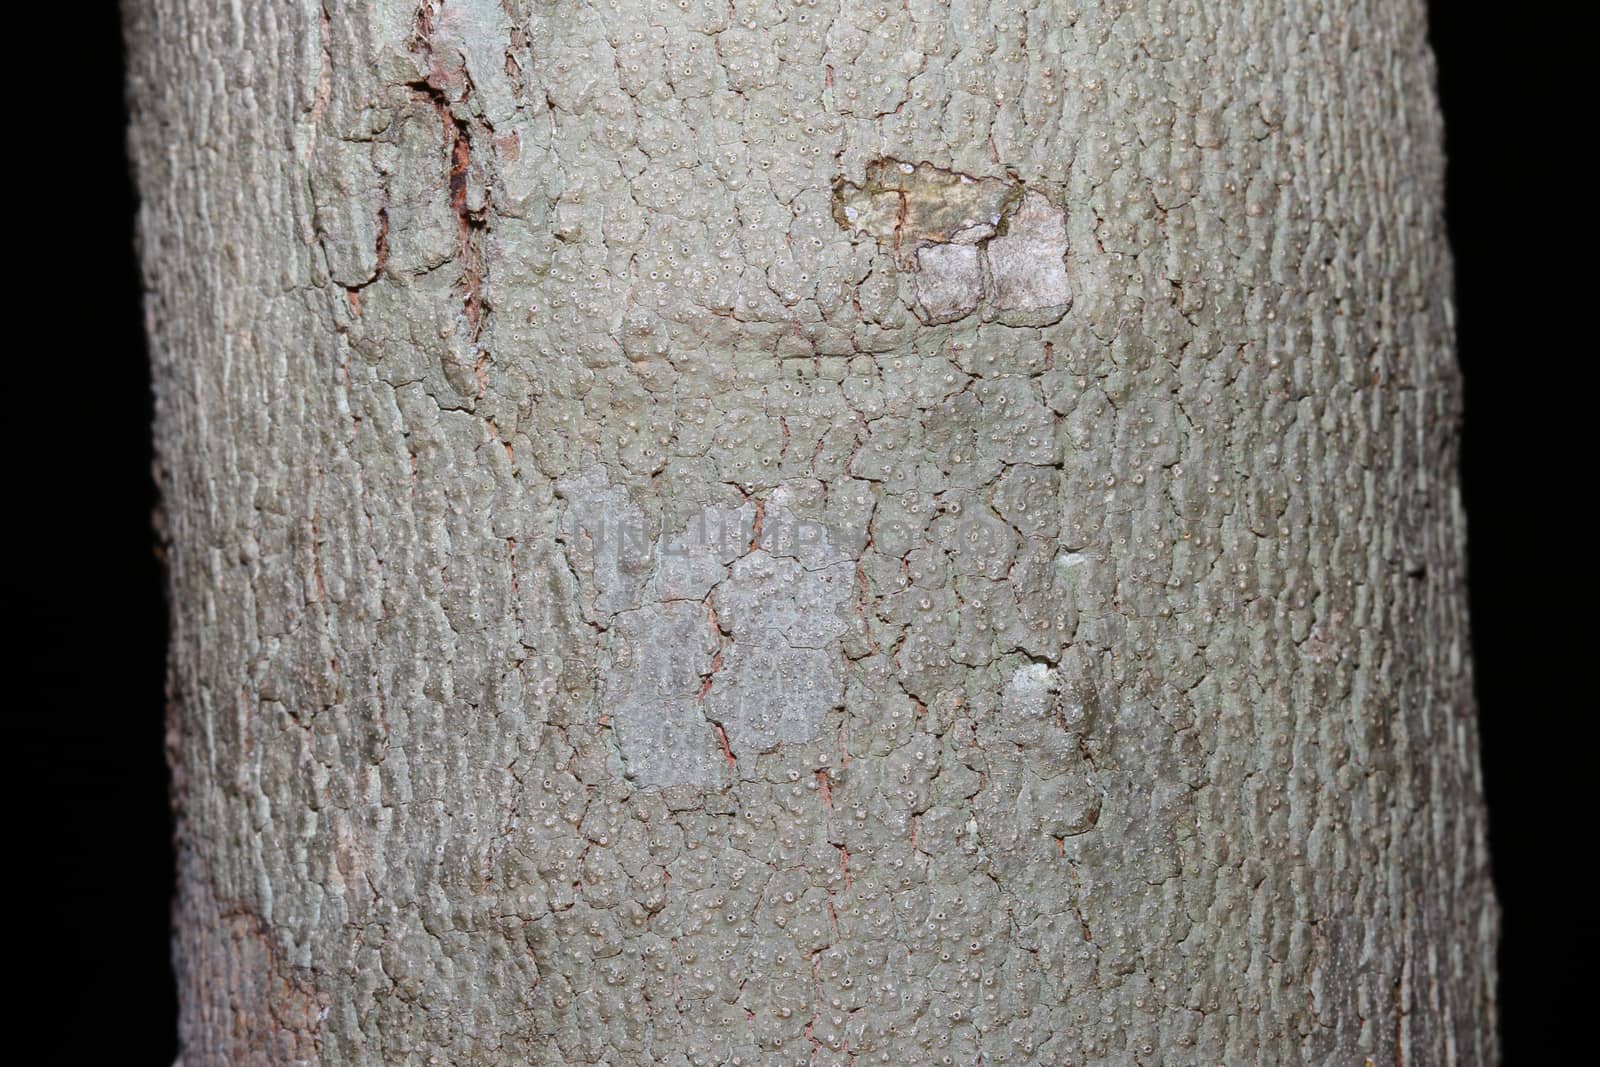 Tree bark texture in black background